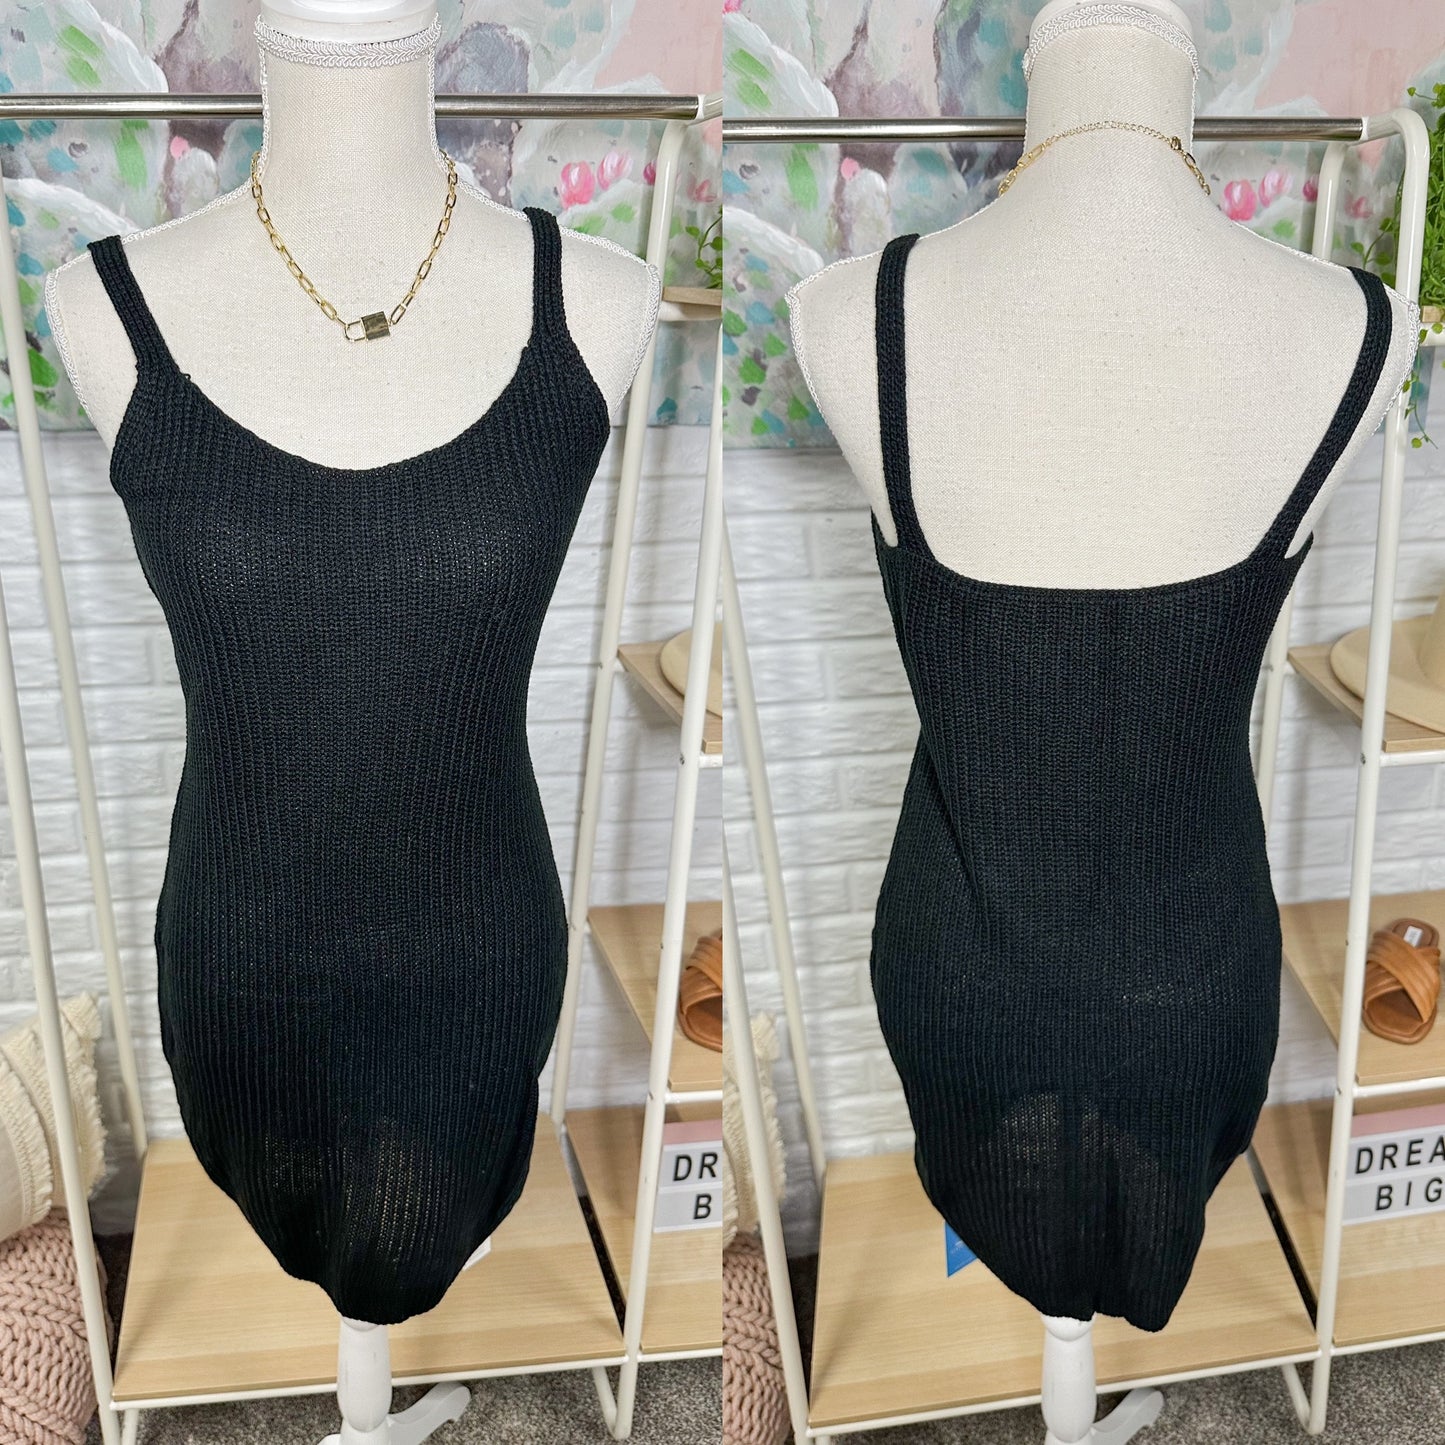 Cupshe New Toasty Black Crochet Dress Size Medium